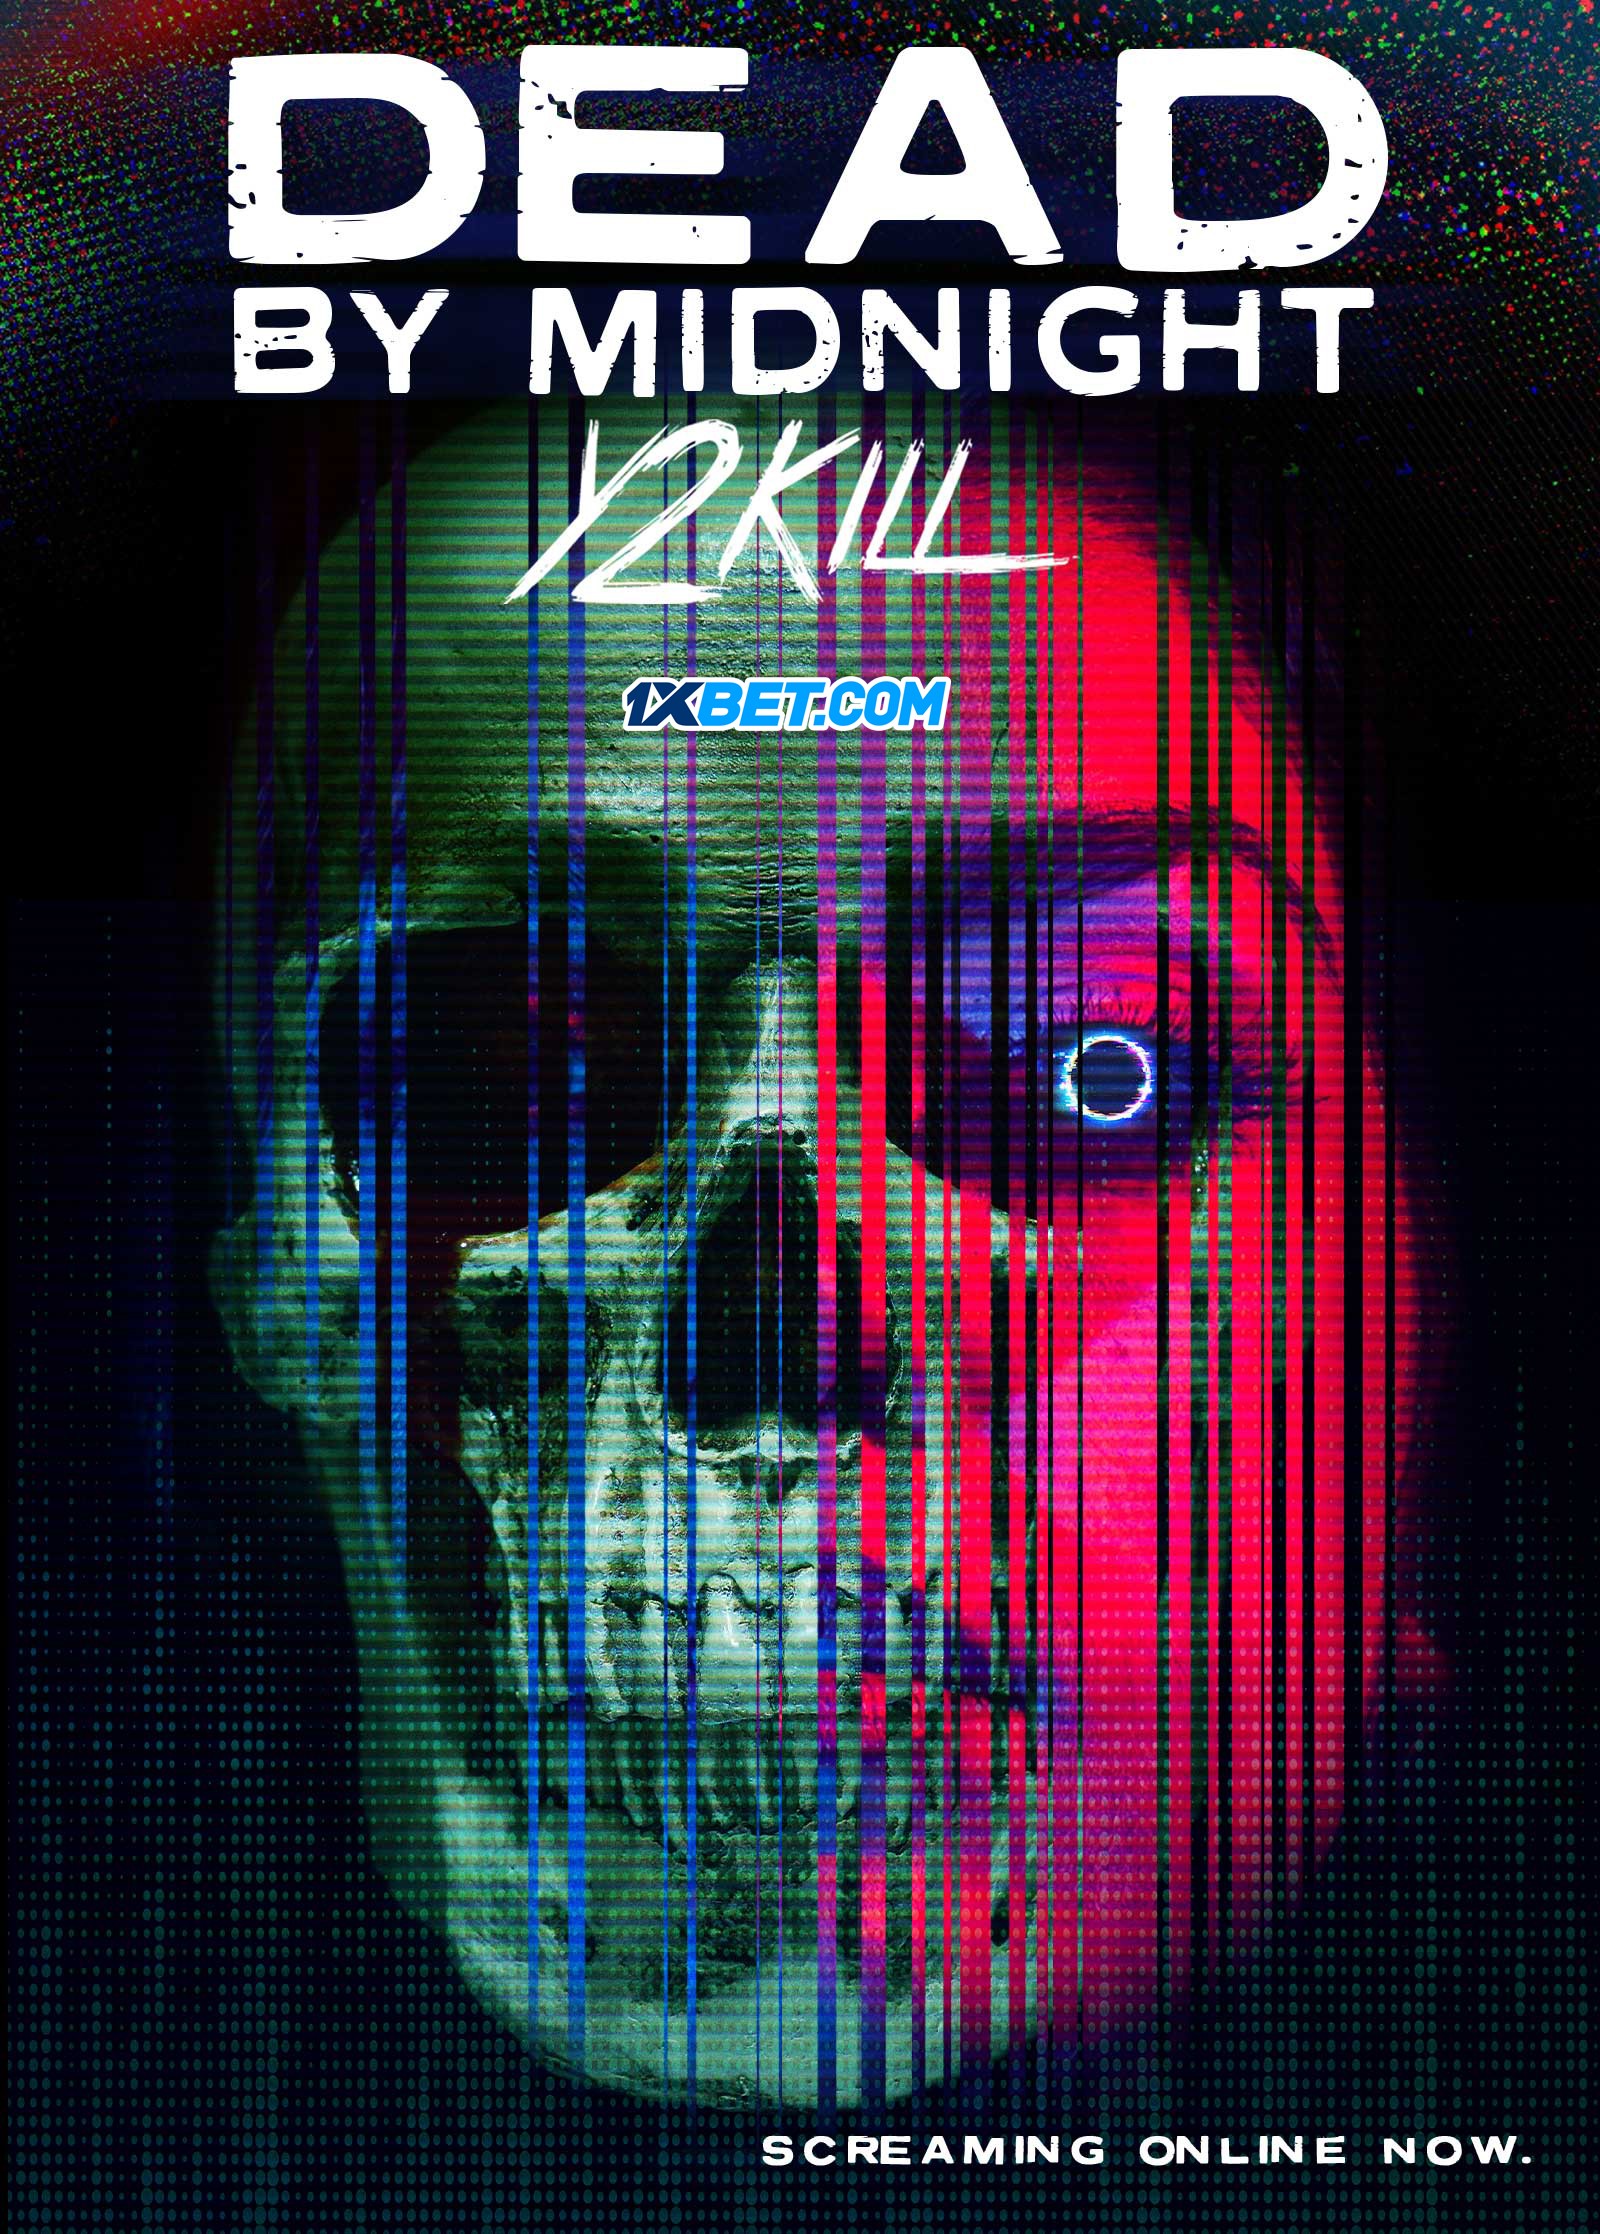 Dead by Midnight (Y2Kill) 2022 Bengali Dubbed (VO) [1XBET] 720p WEBRip Online Stream